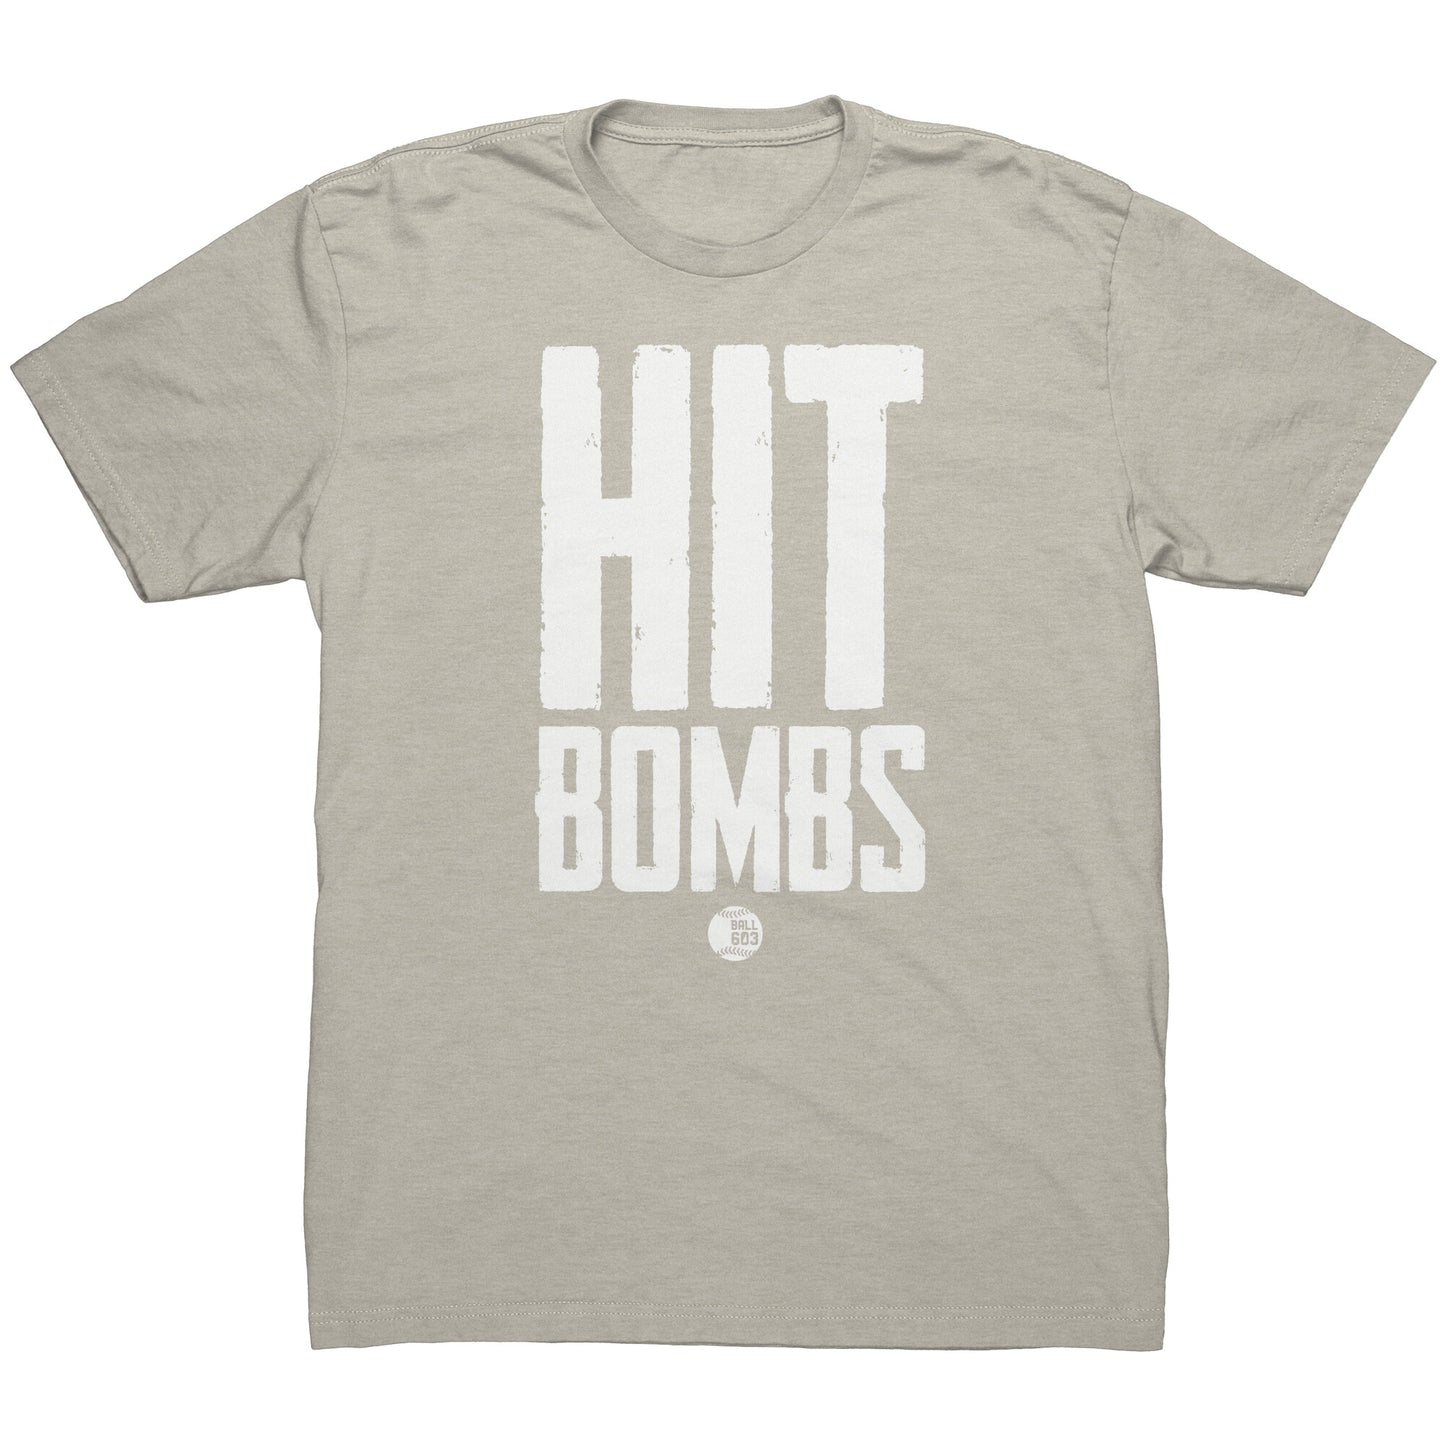 Hit Bombs (Men's Cut)